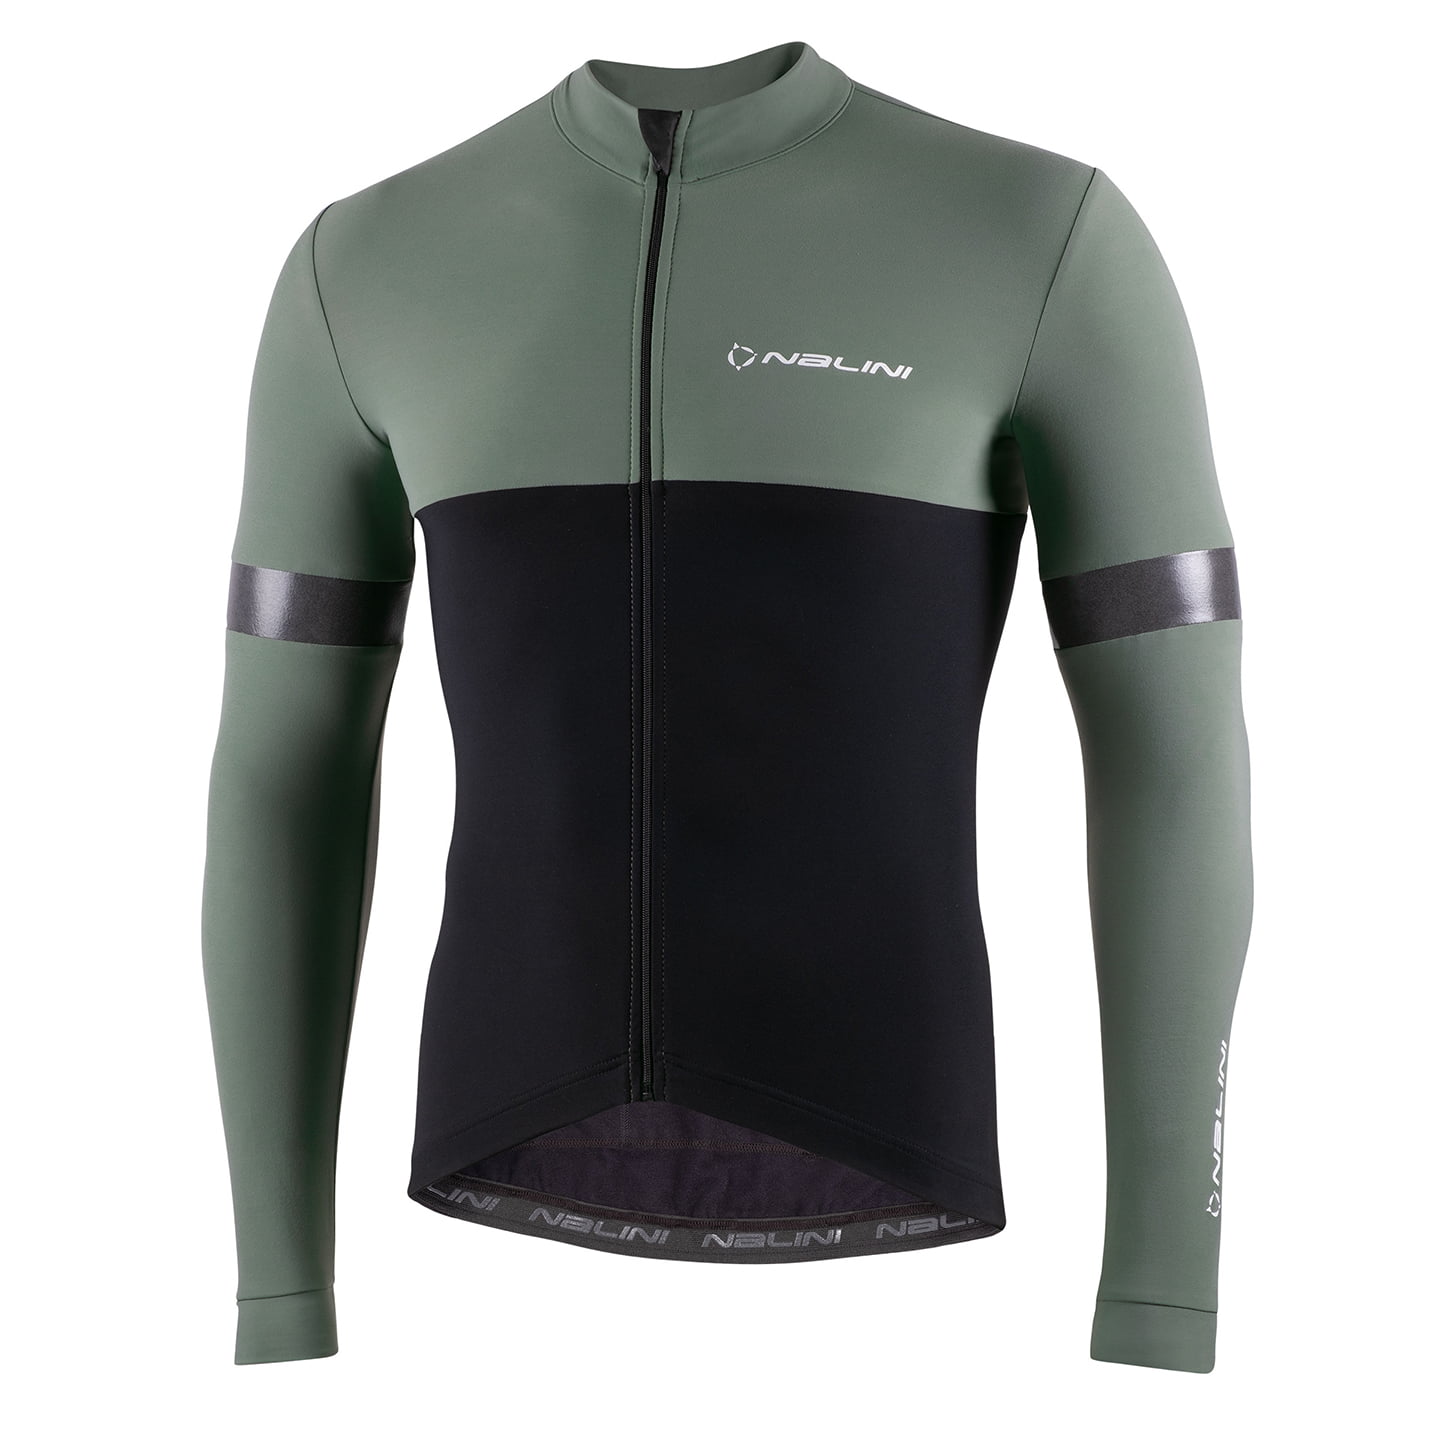 NALINI New Warm Reflex Long Sleeve Jersey Long Sleeve Jersey, for men, size 2XL, Cycling jersey, Cycle clothing